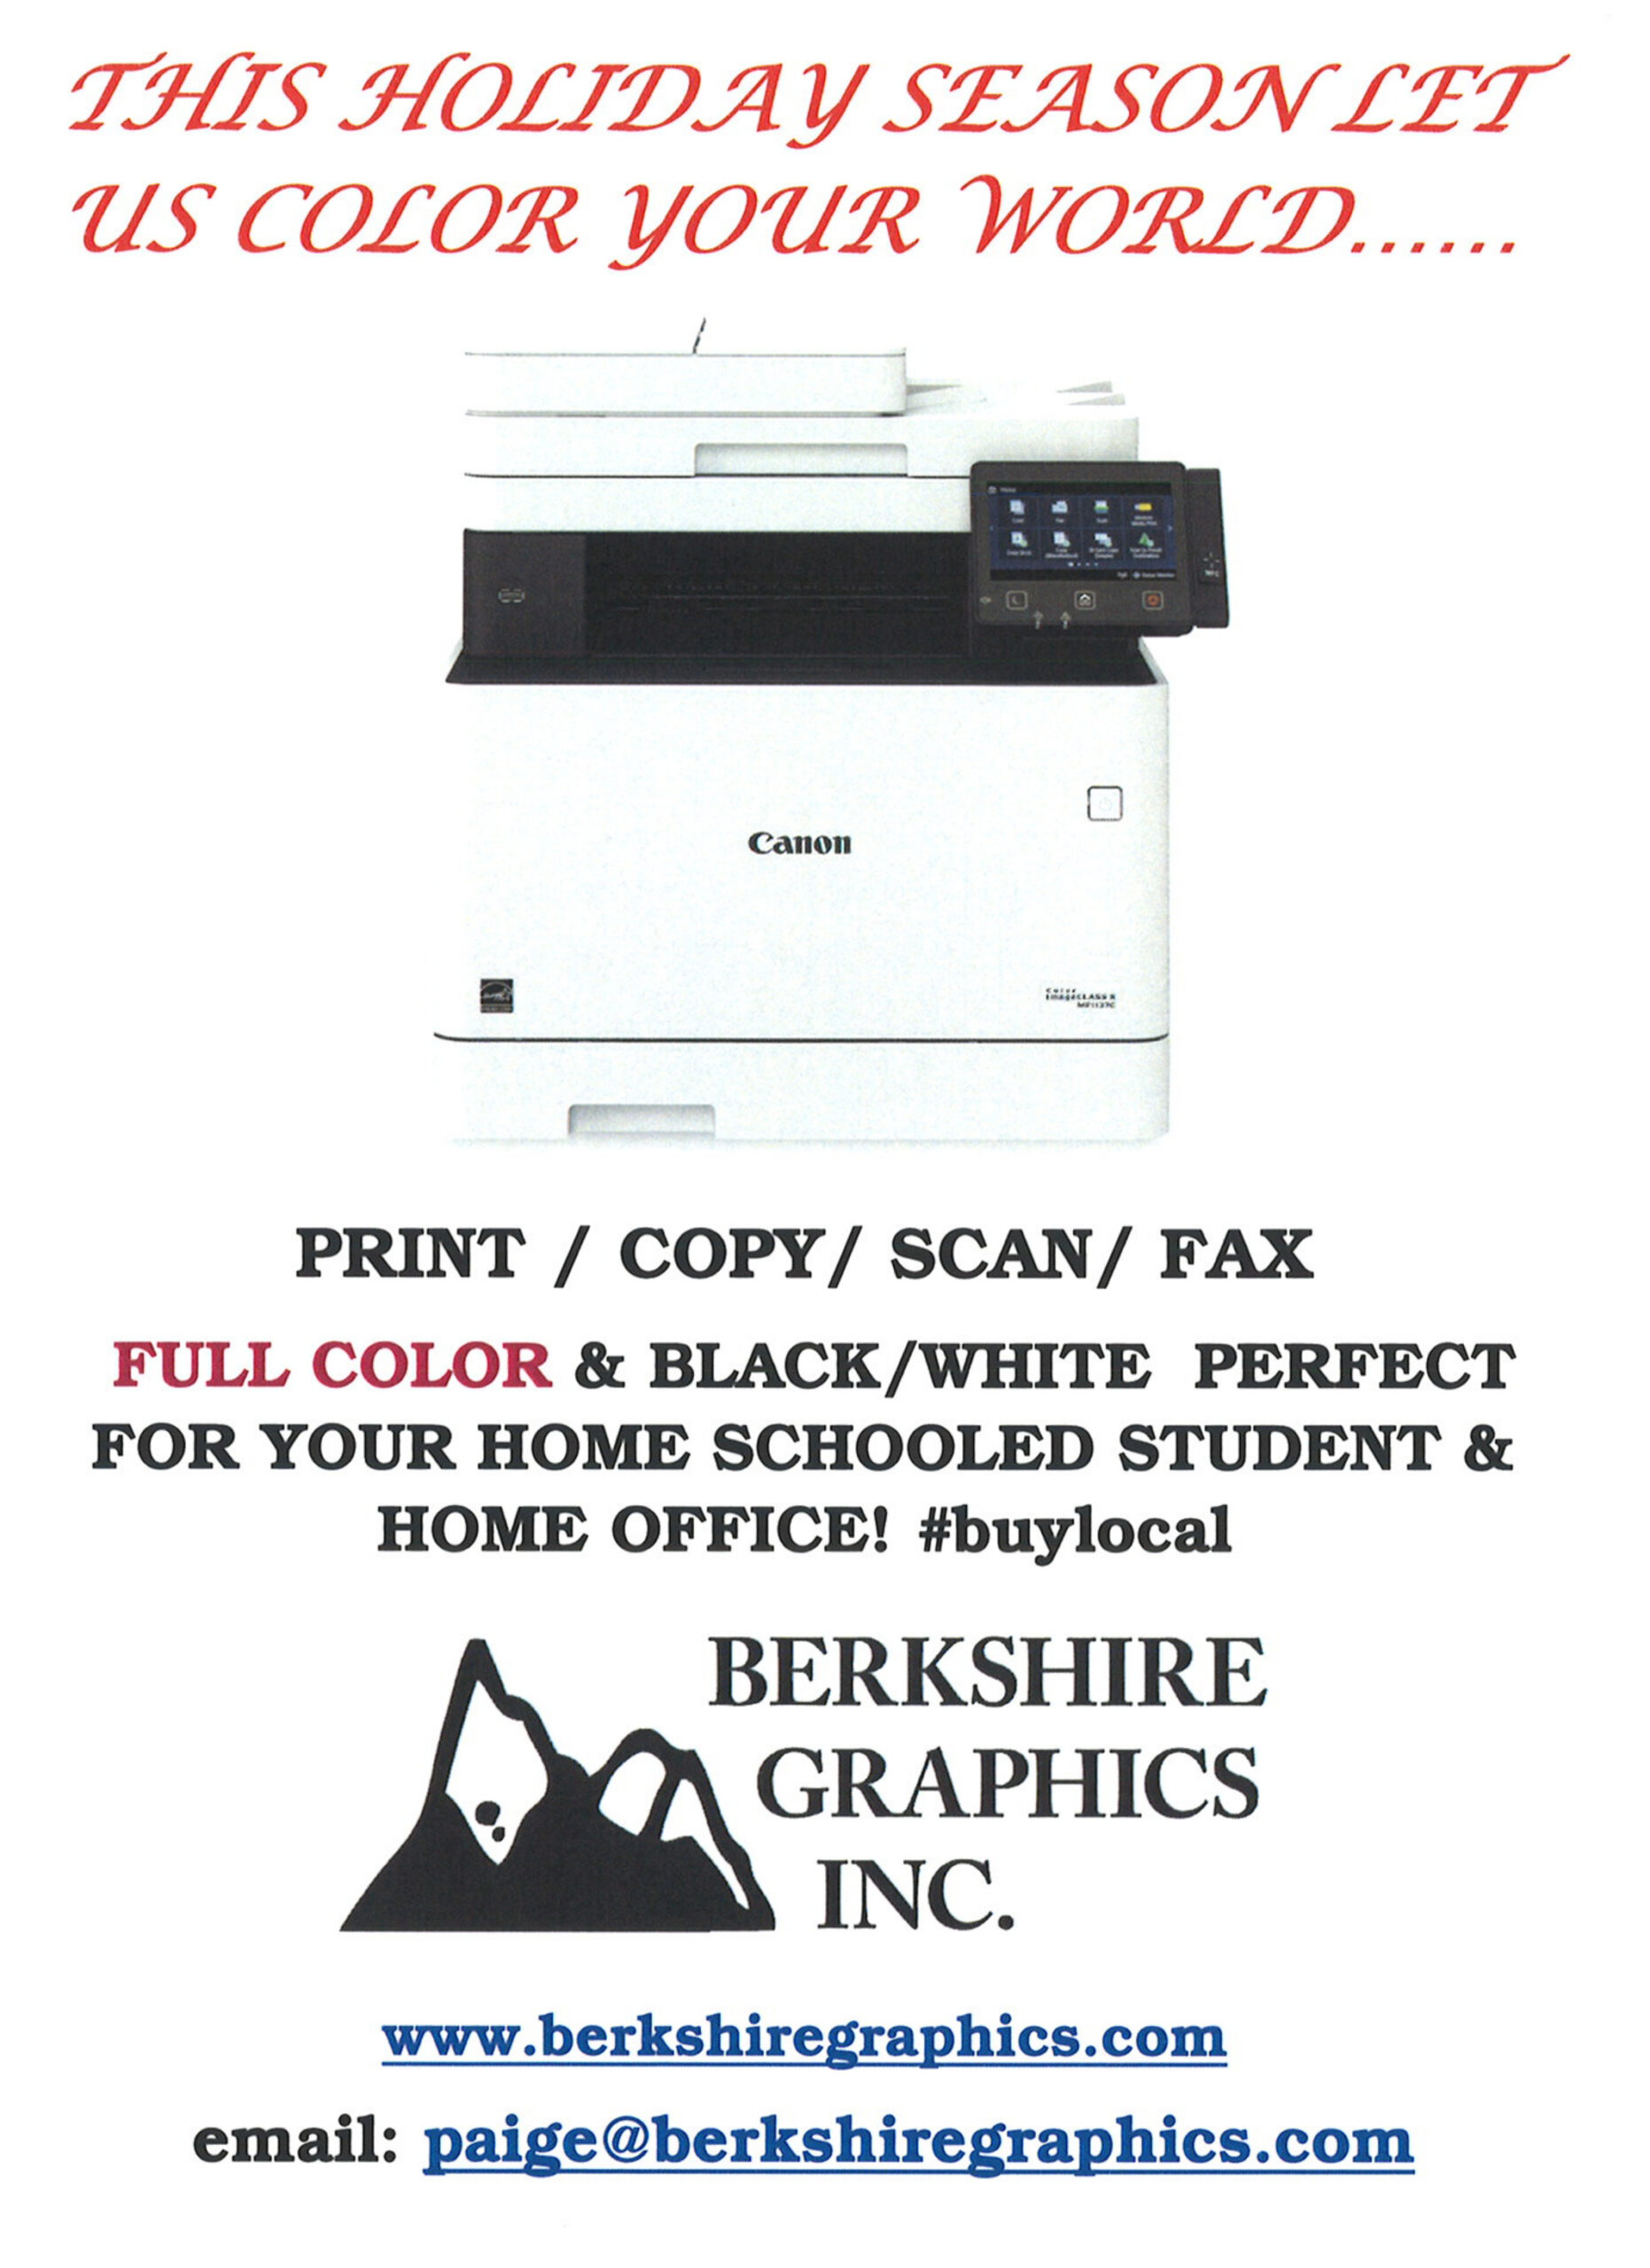 Berkshire Graphics, Inc.